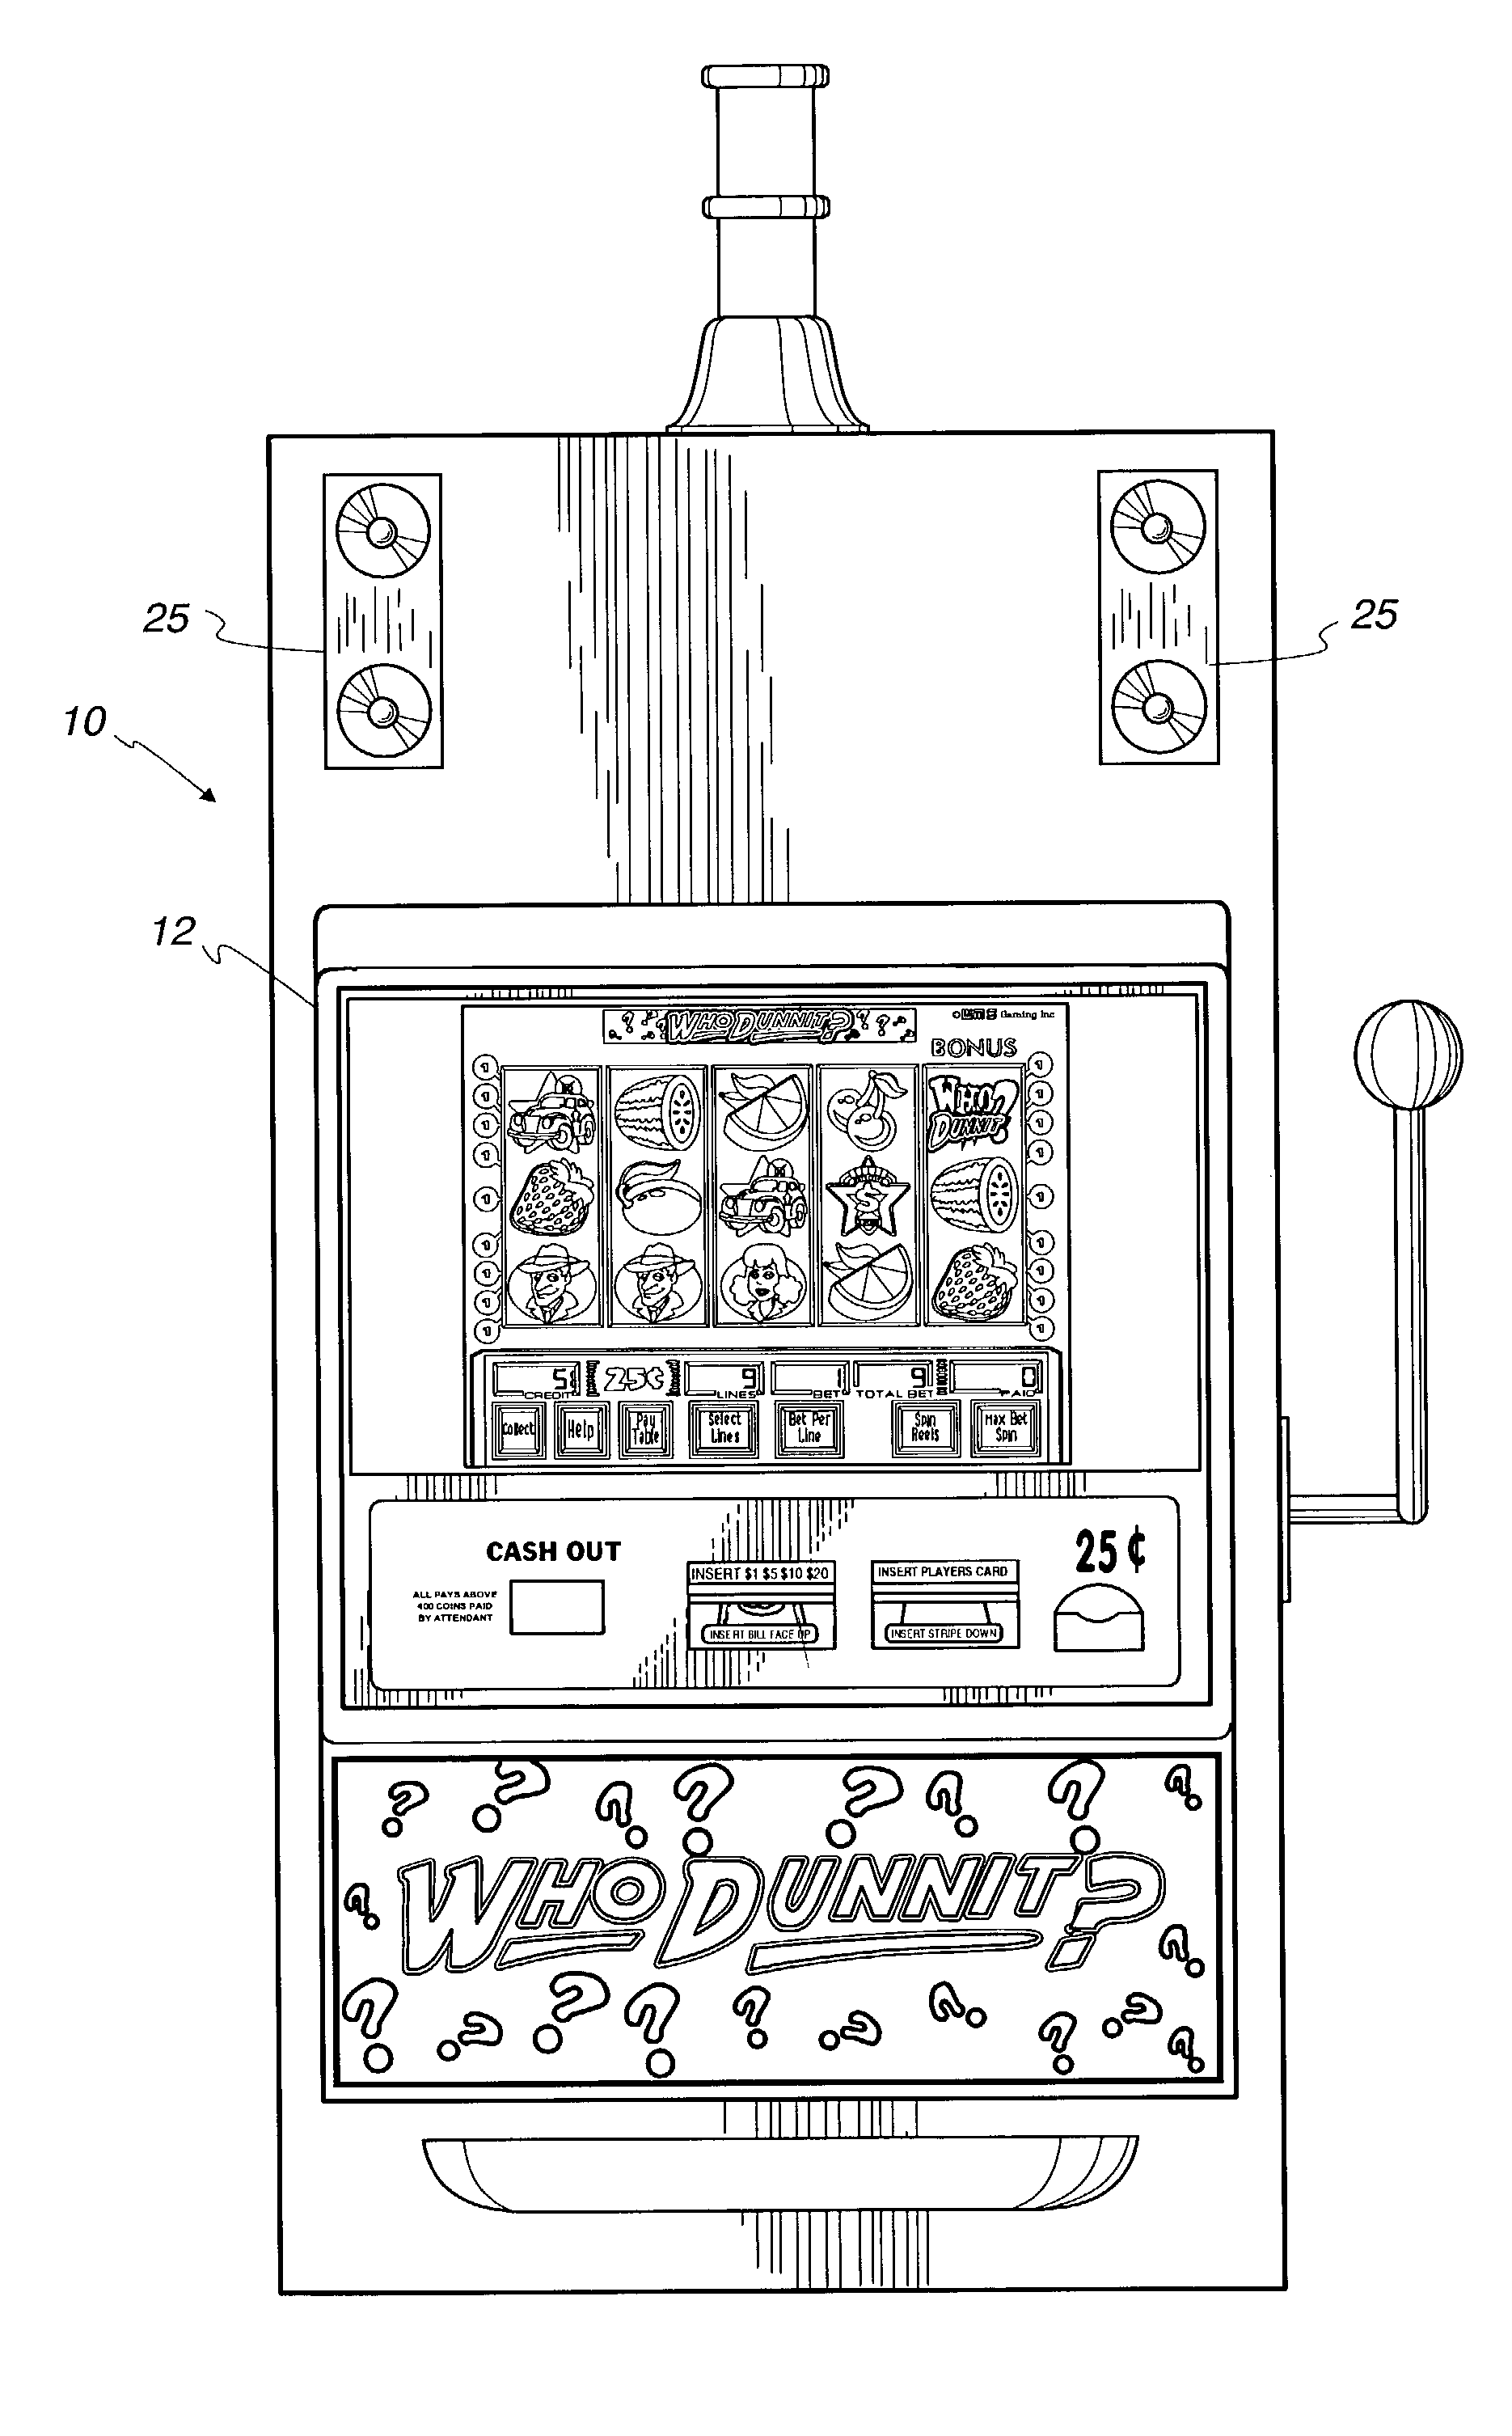 Gaming machine having improved audio control architecture